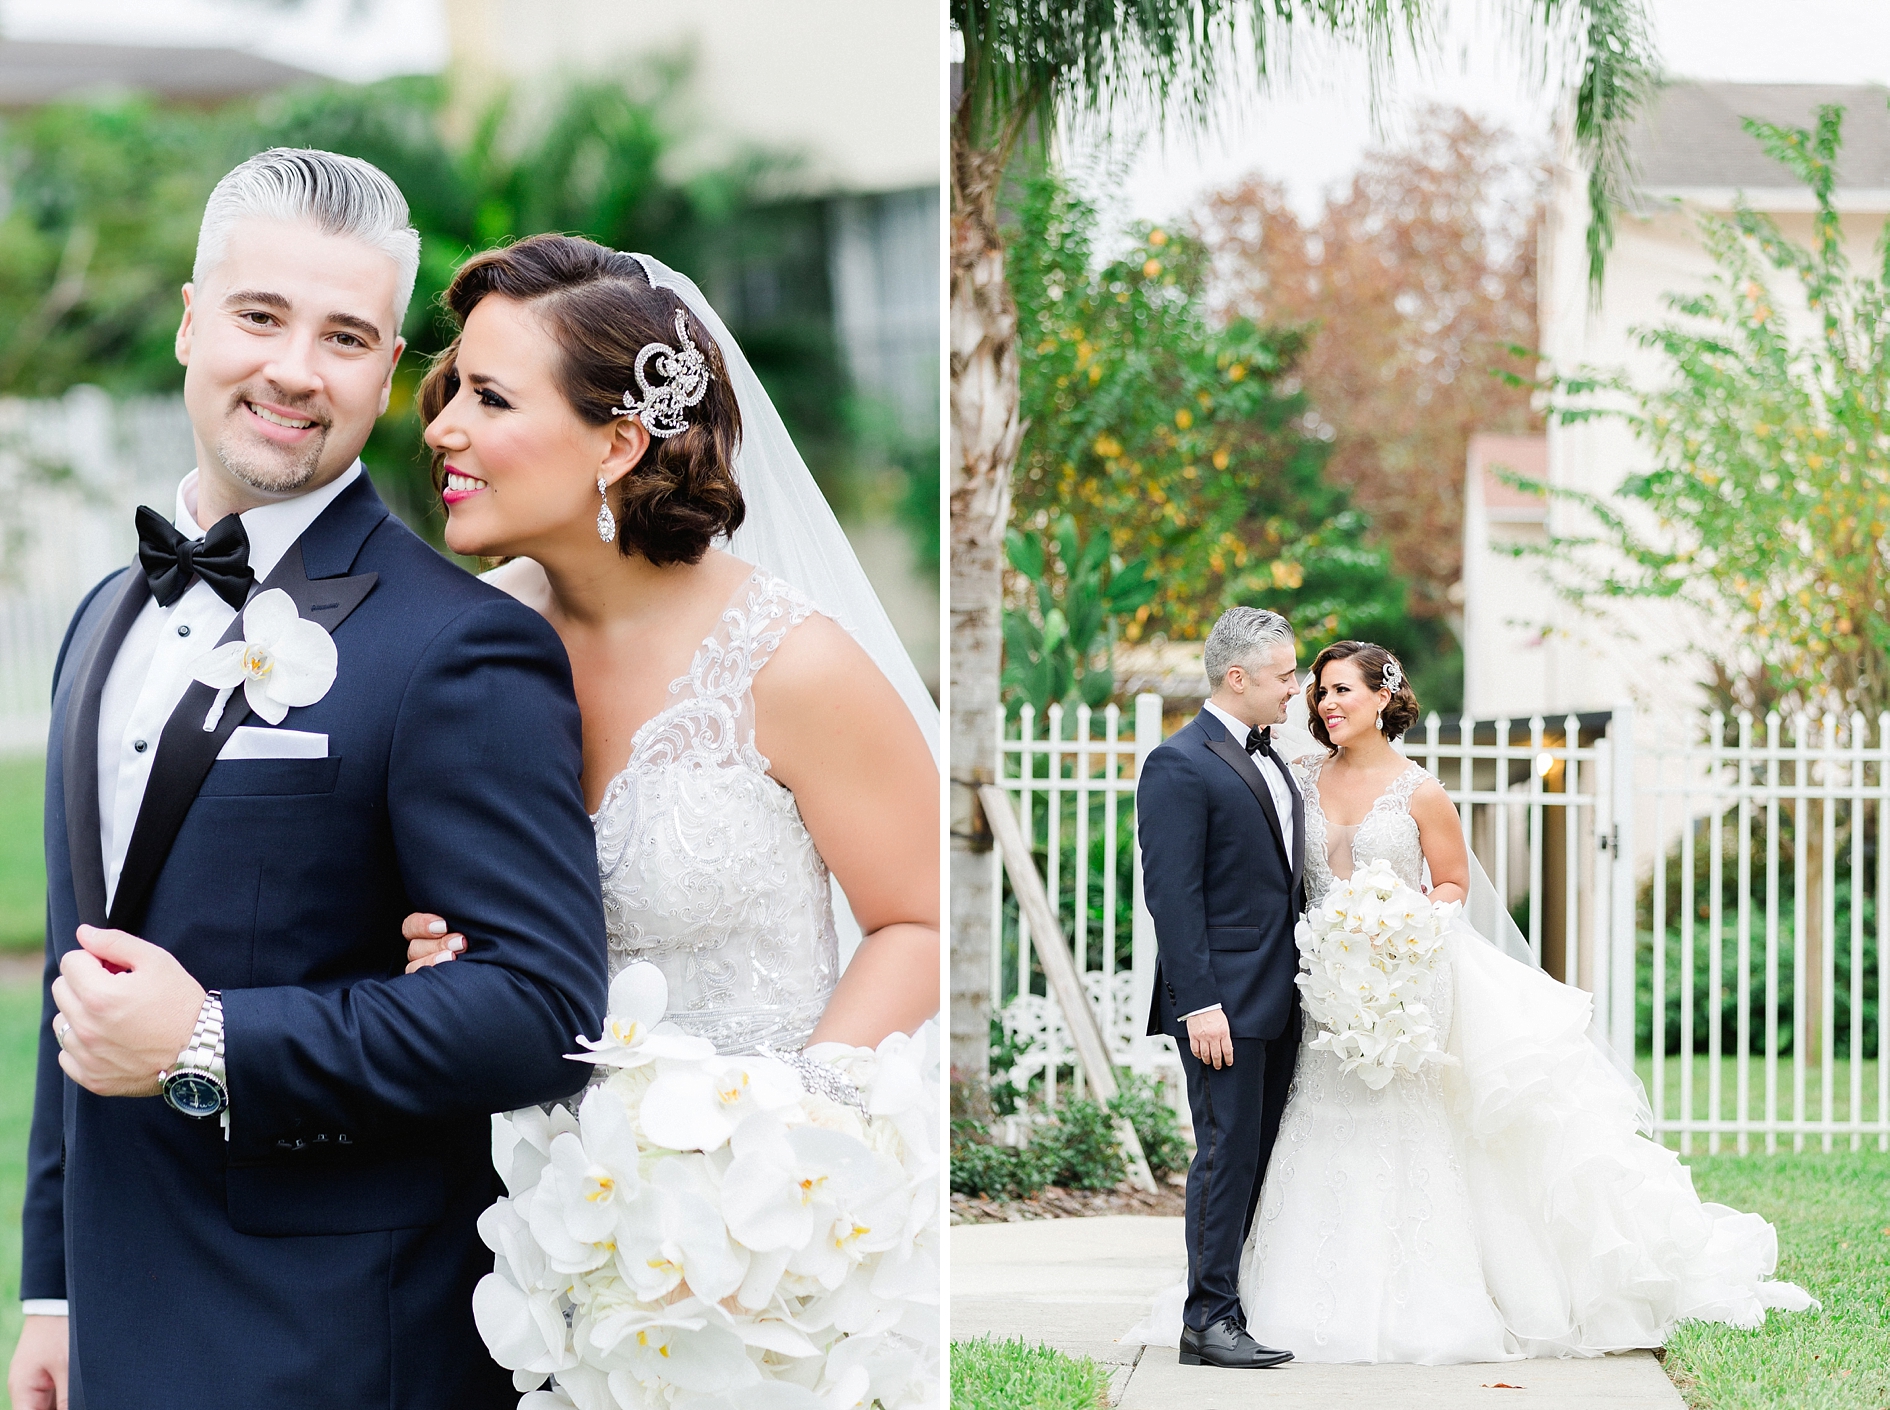 Tampa Luxury Wedding | © Ailyn La Torre Photography 2016